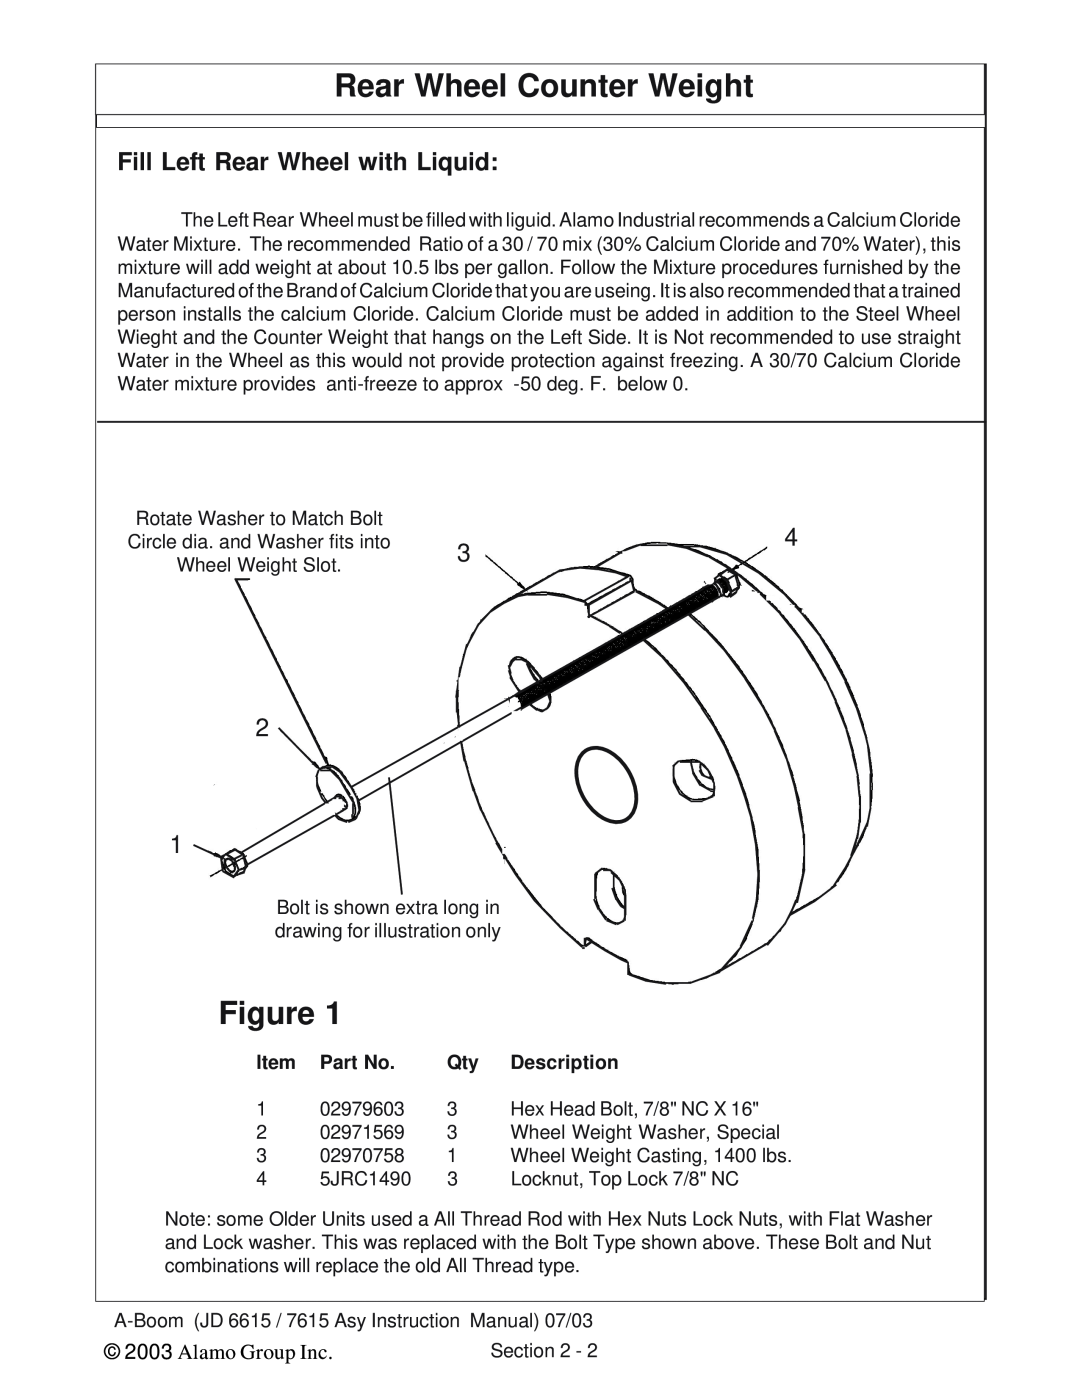 Alamo DSEB-D16/SAS Rear Wheel Counter Weight, Fill Left Rear Wheel with Liquid, Alamo Group Inc, Description 